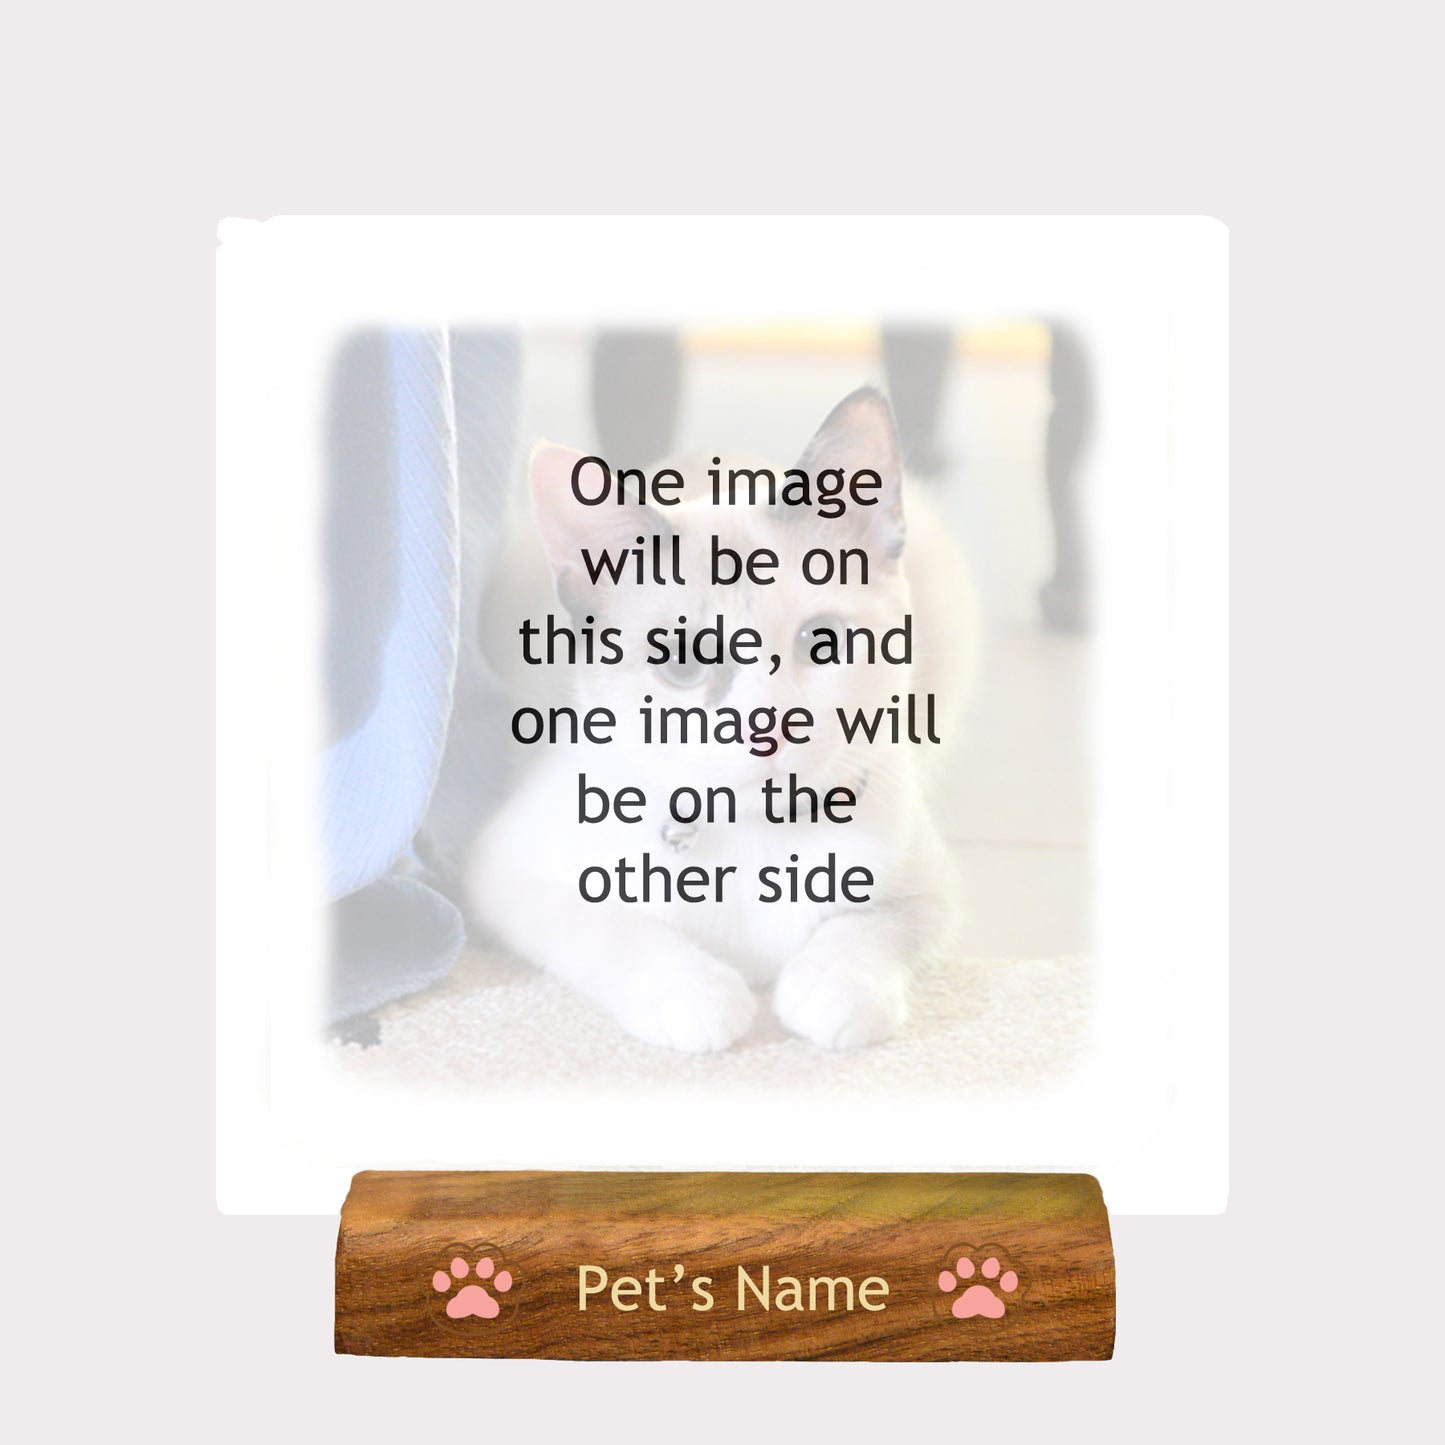 5" x 5" Custom Pet Photo on Wood with Display stand